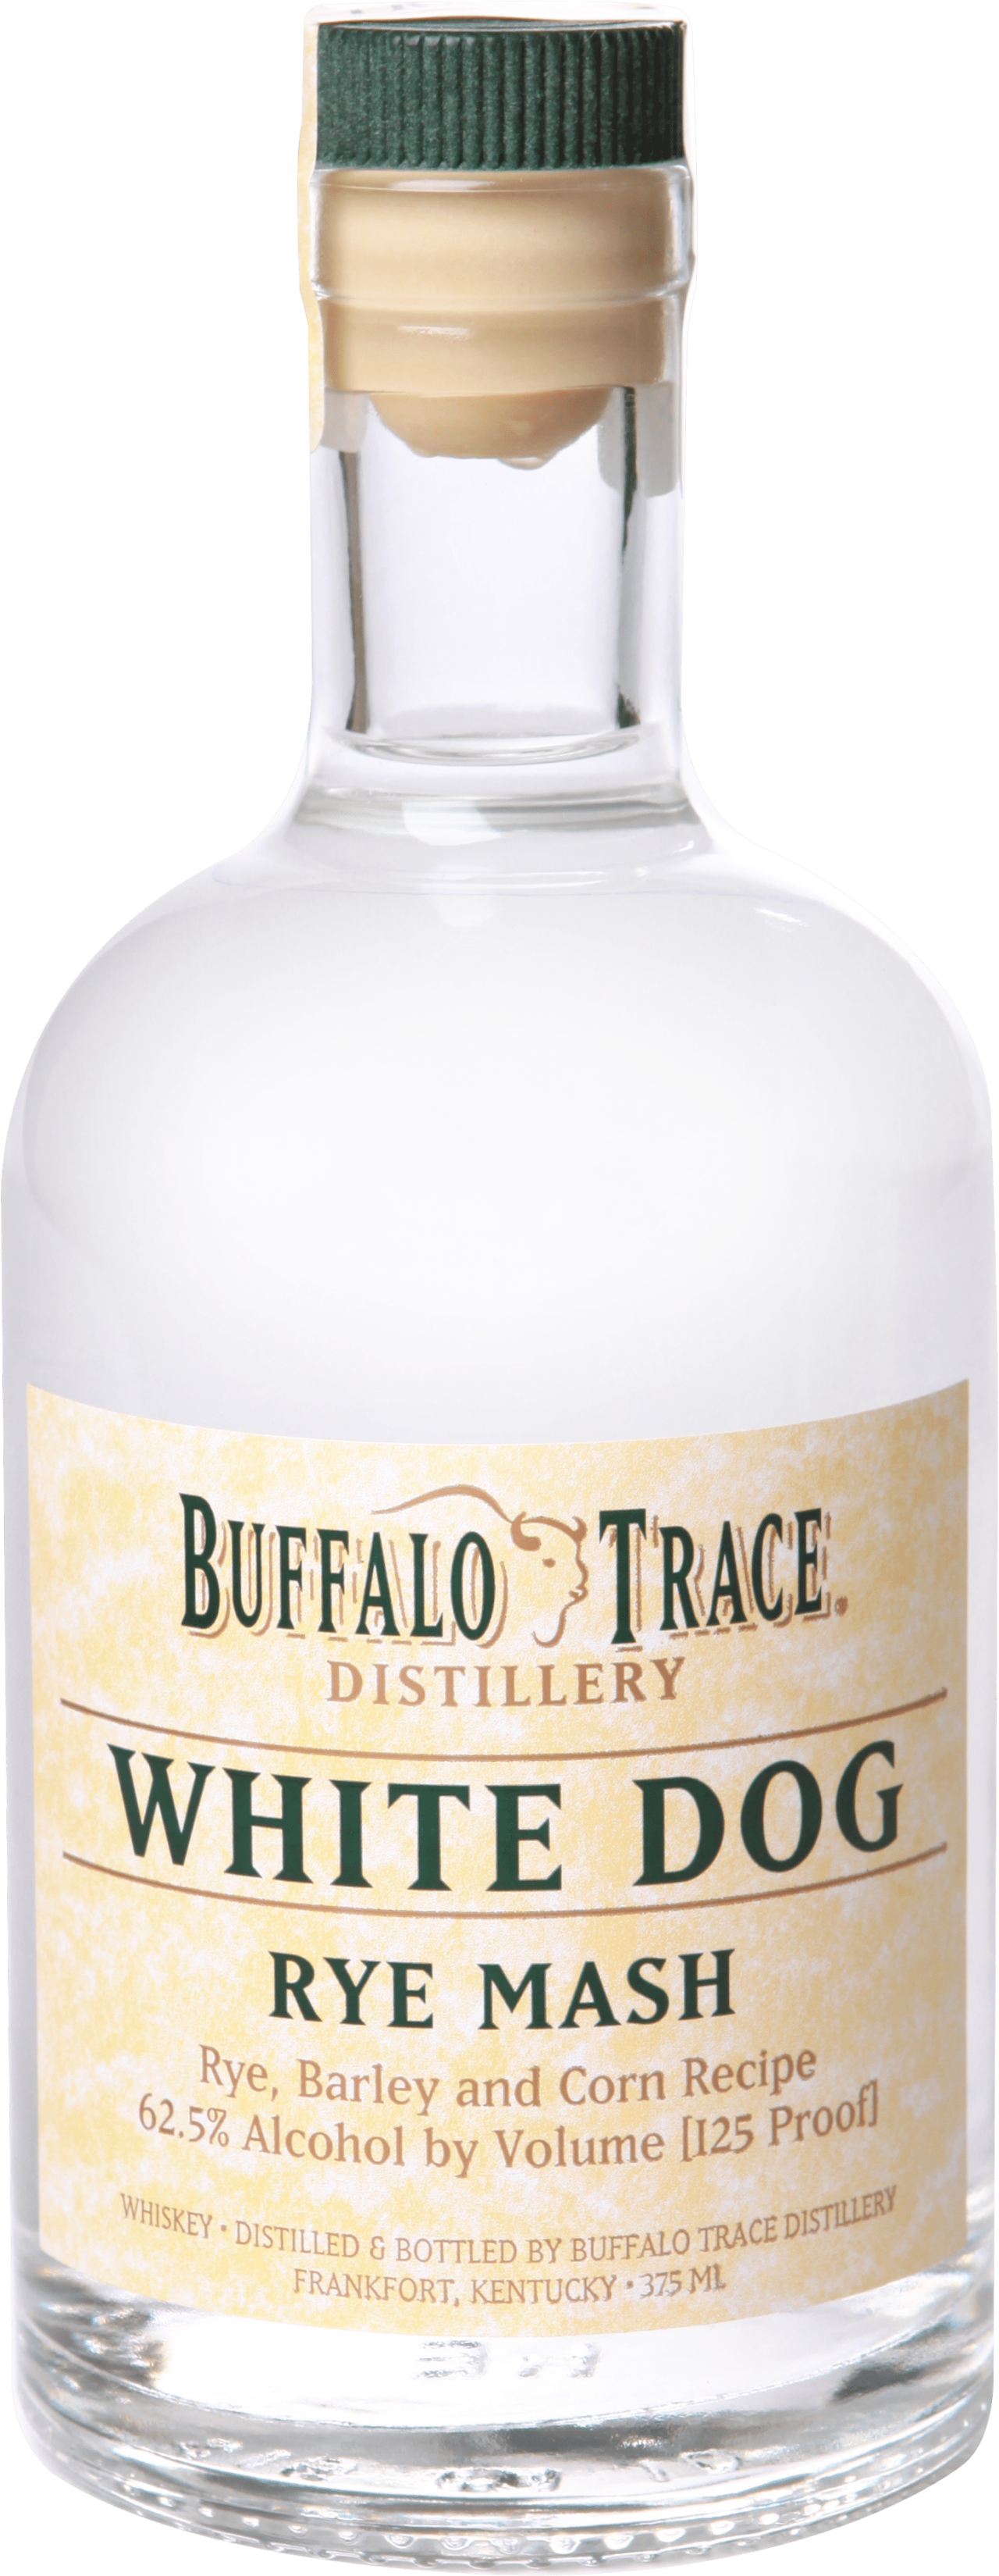 Buffalo Trace Distillery White Dog Rye Mash bottle 